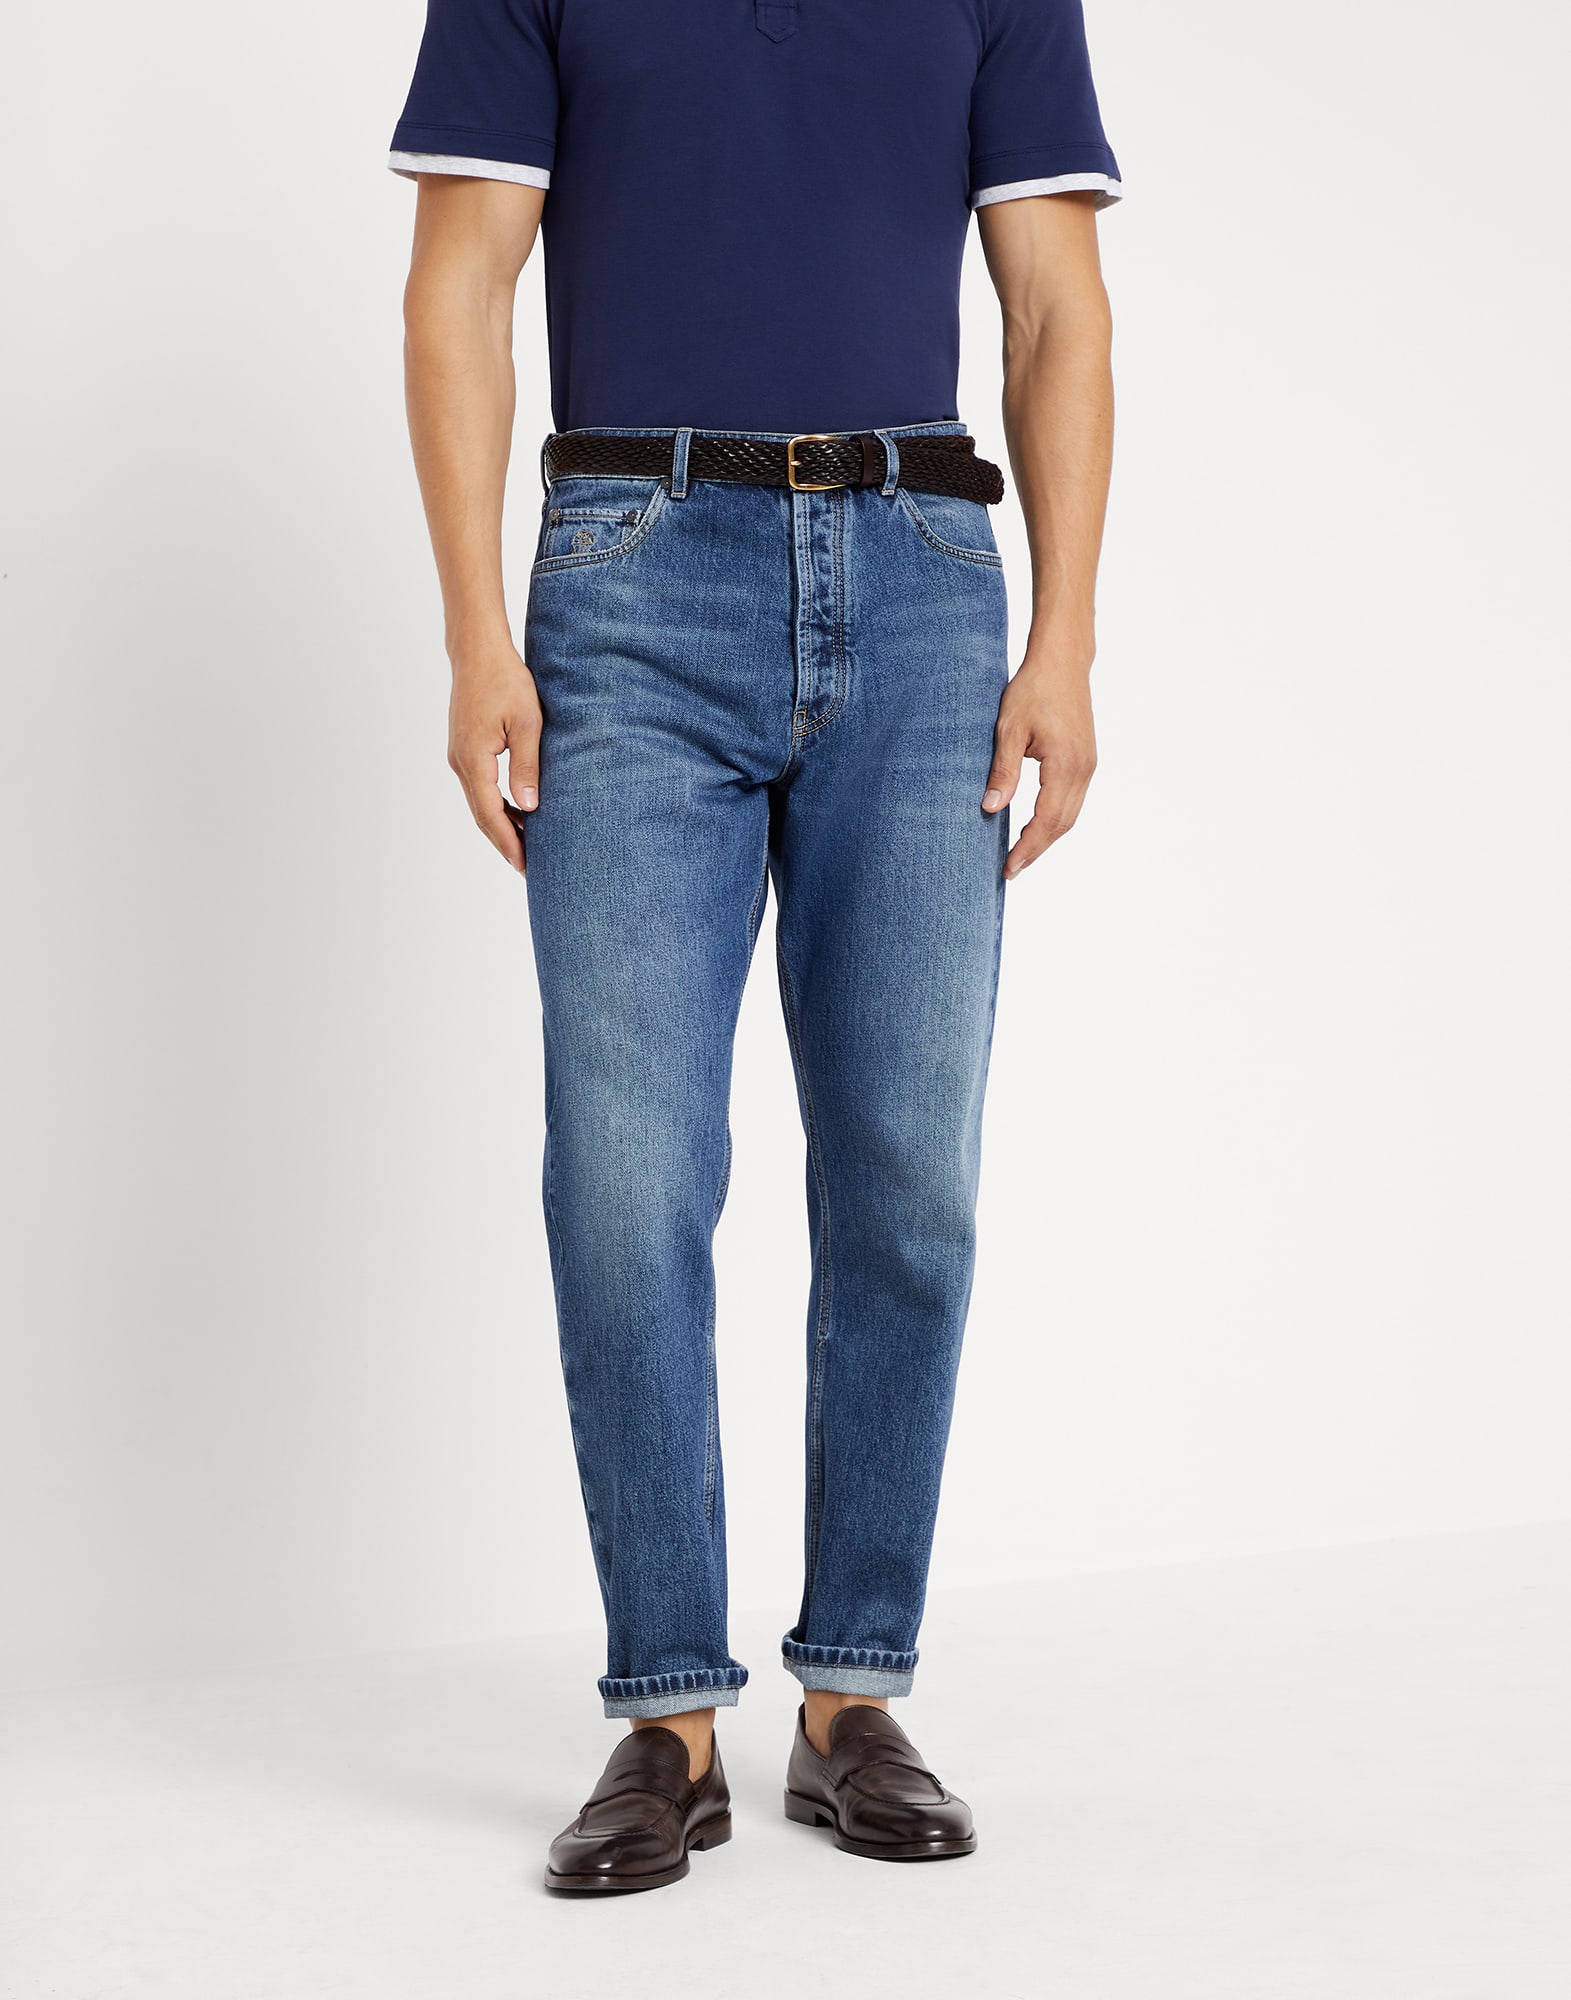 Men's jeans - Luxury denim collection